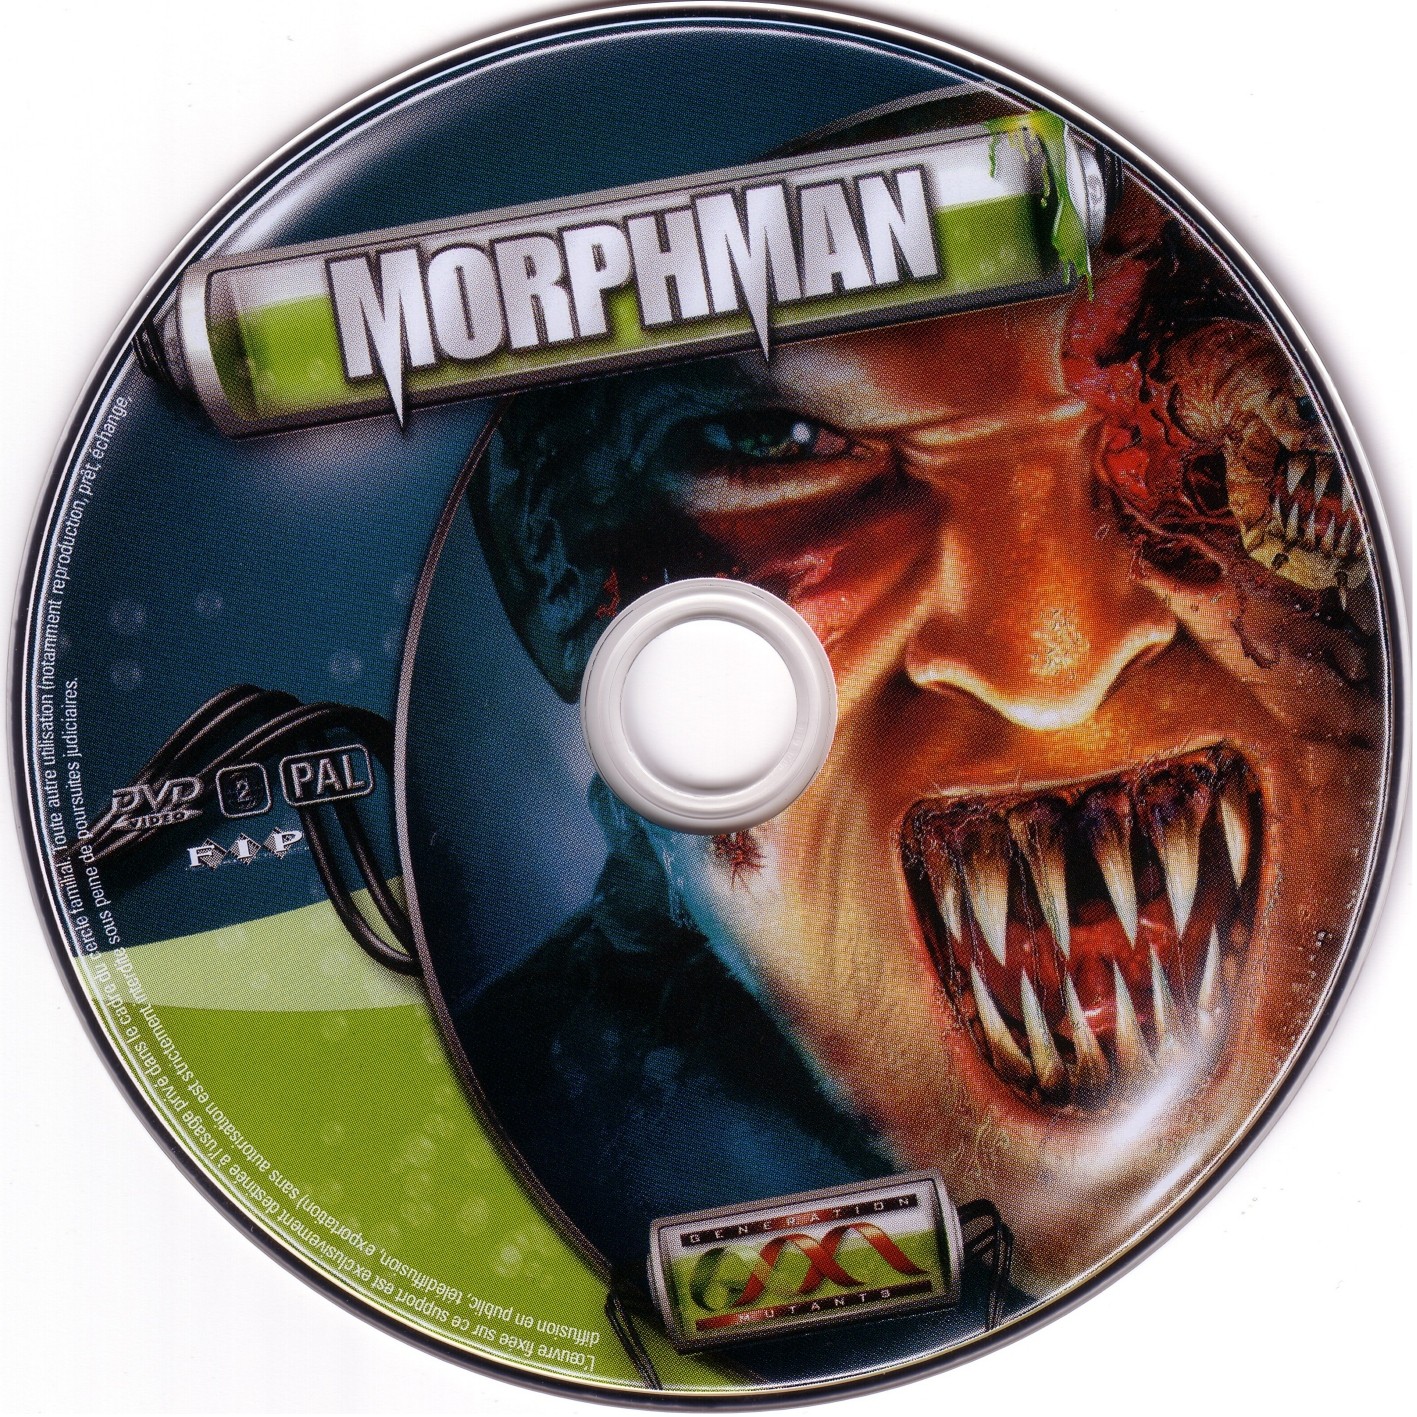 Morphman